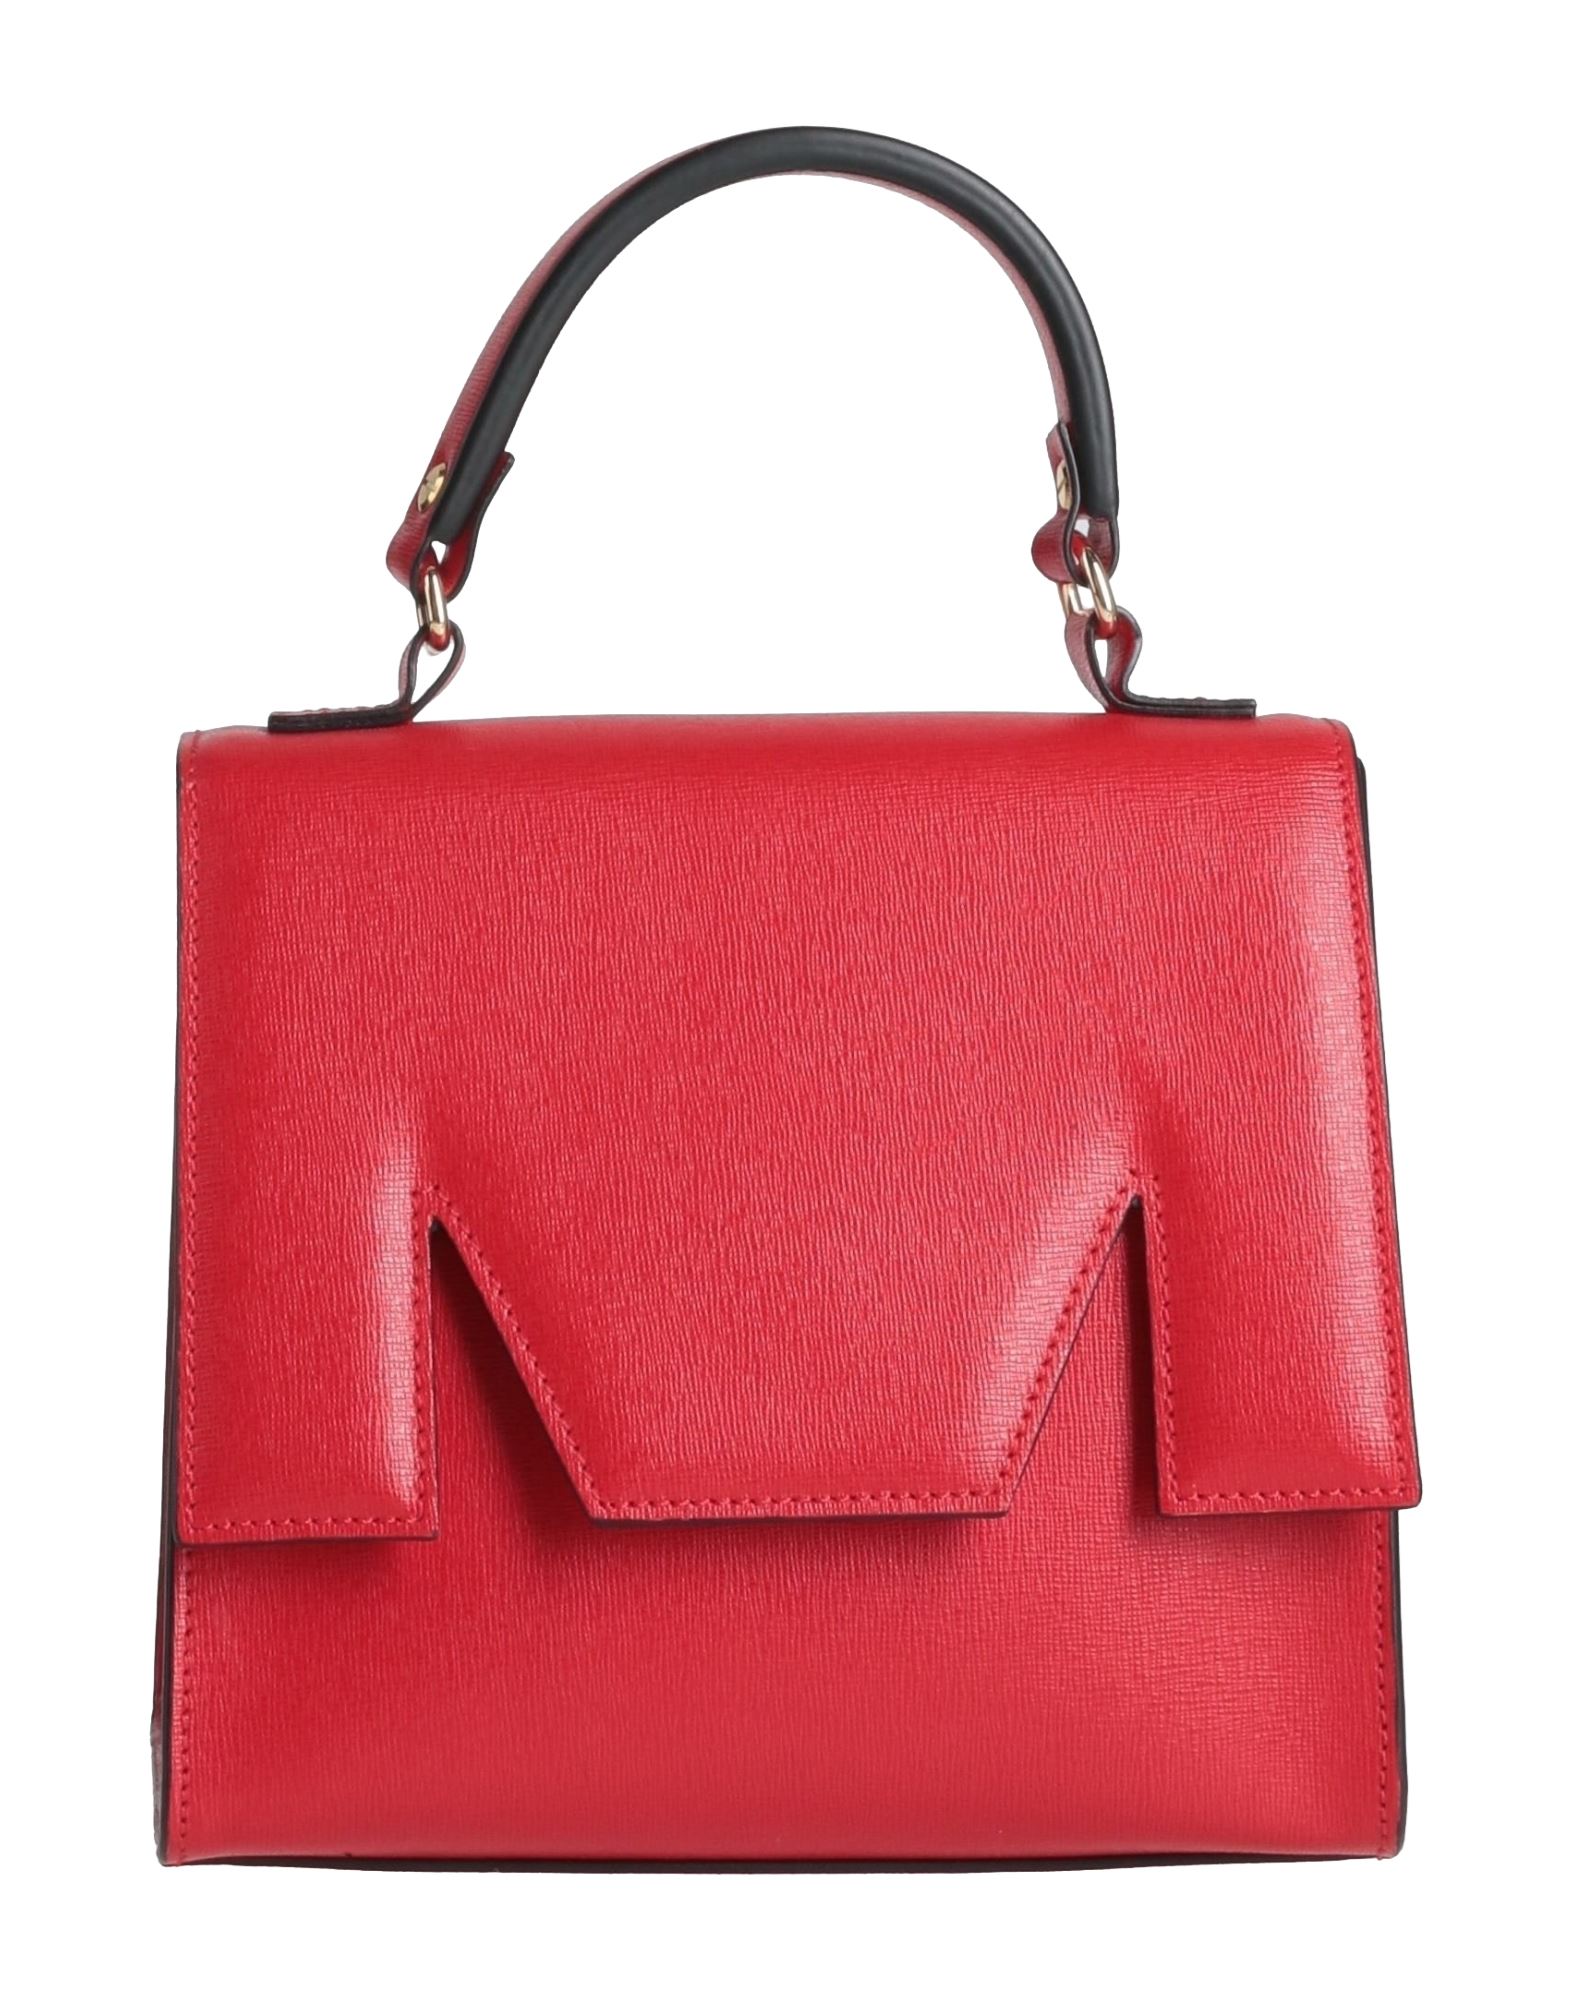 Msgm Handbags In Red